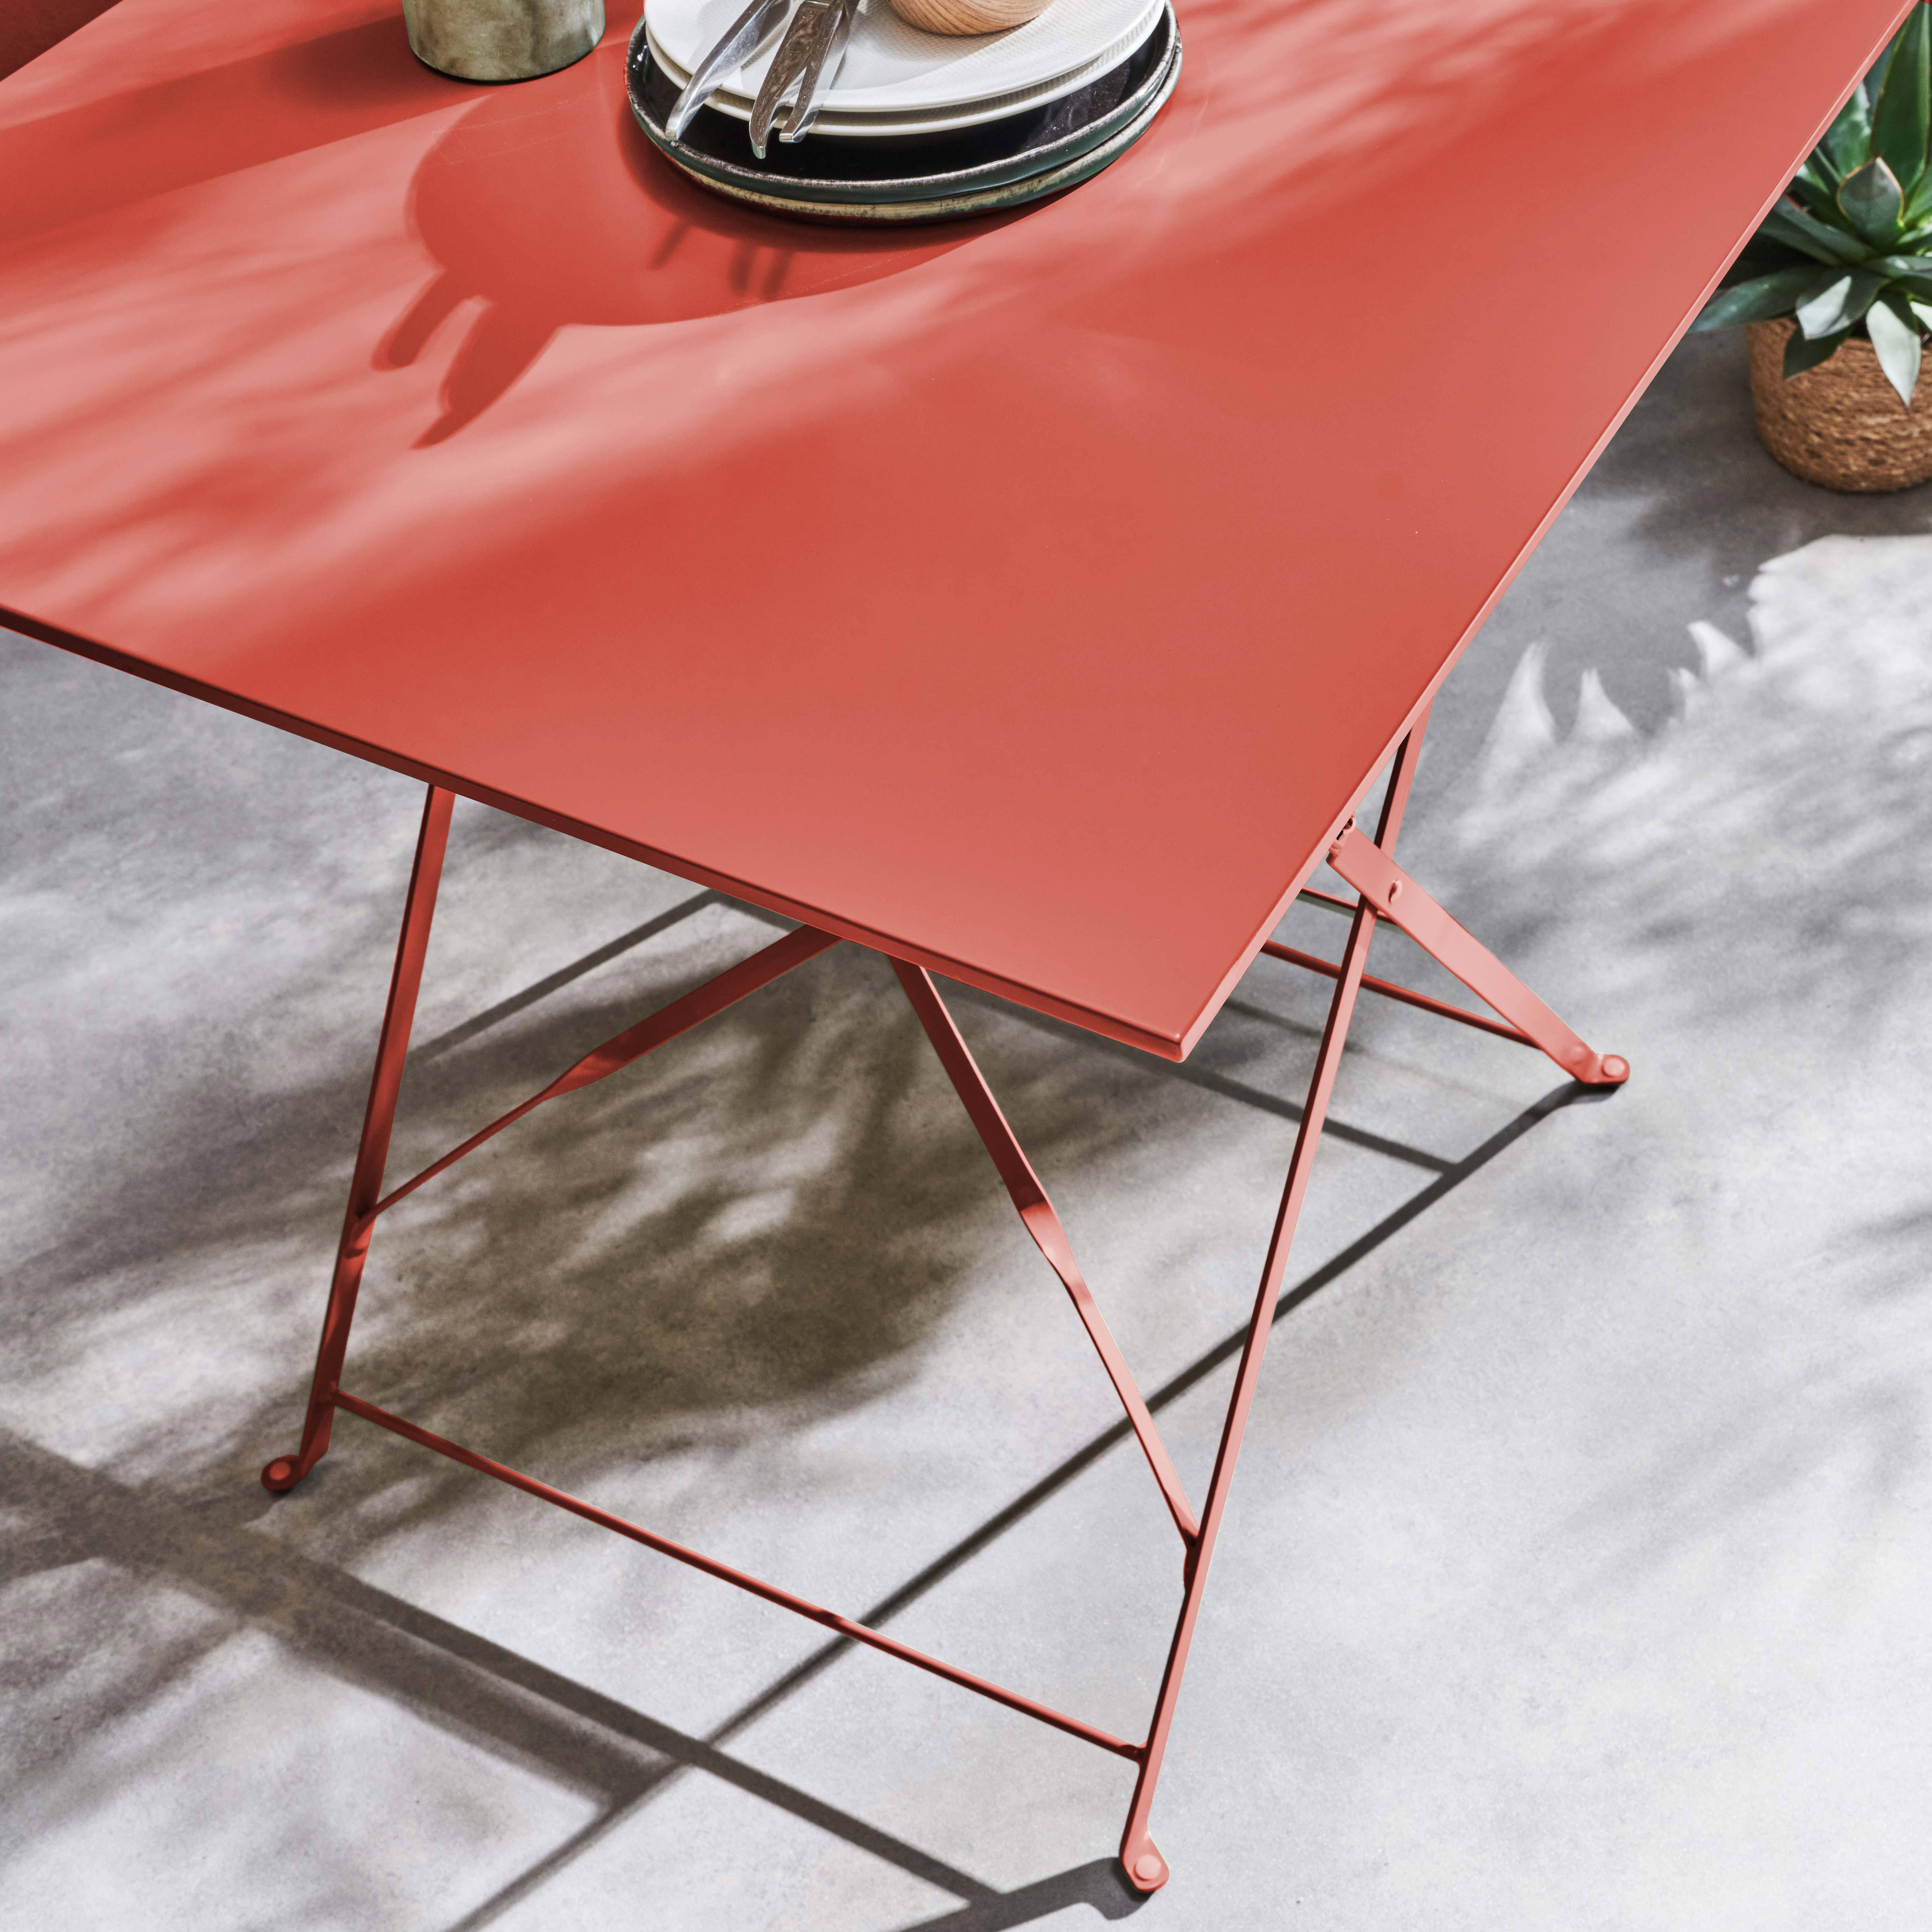 Emilia - Tuintafel bistrot opvouwbaar - Vierkante tafel 70x70cm van staal met thermolak - Terra Cotta ,sweeek,Photo2